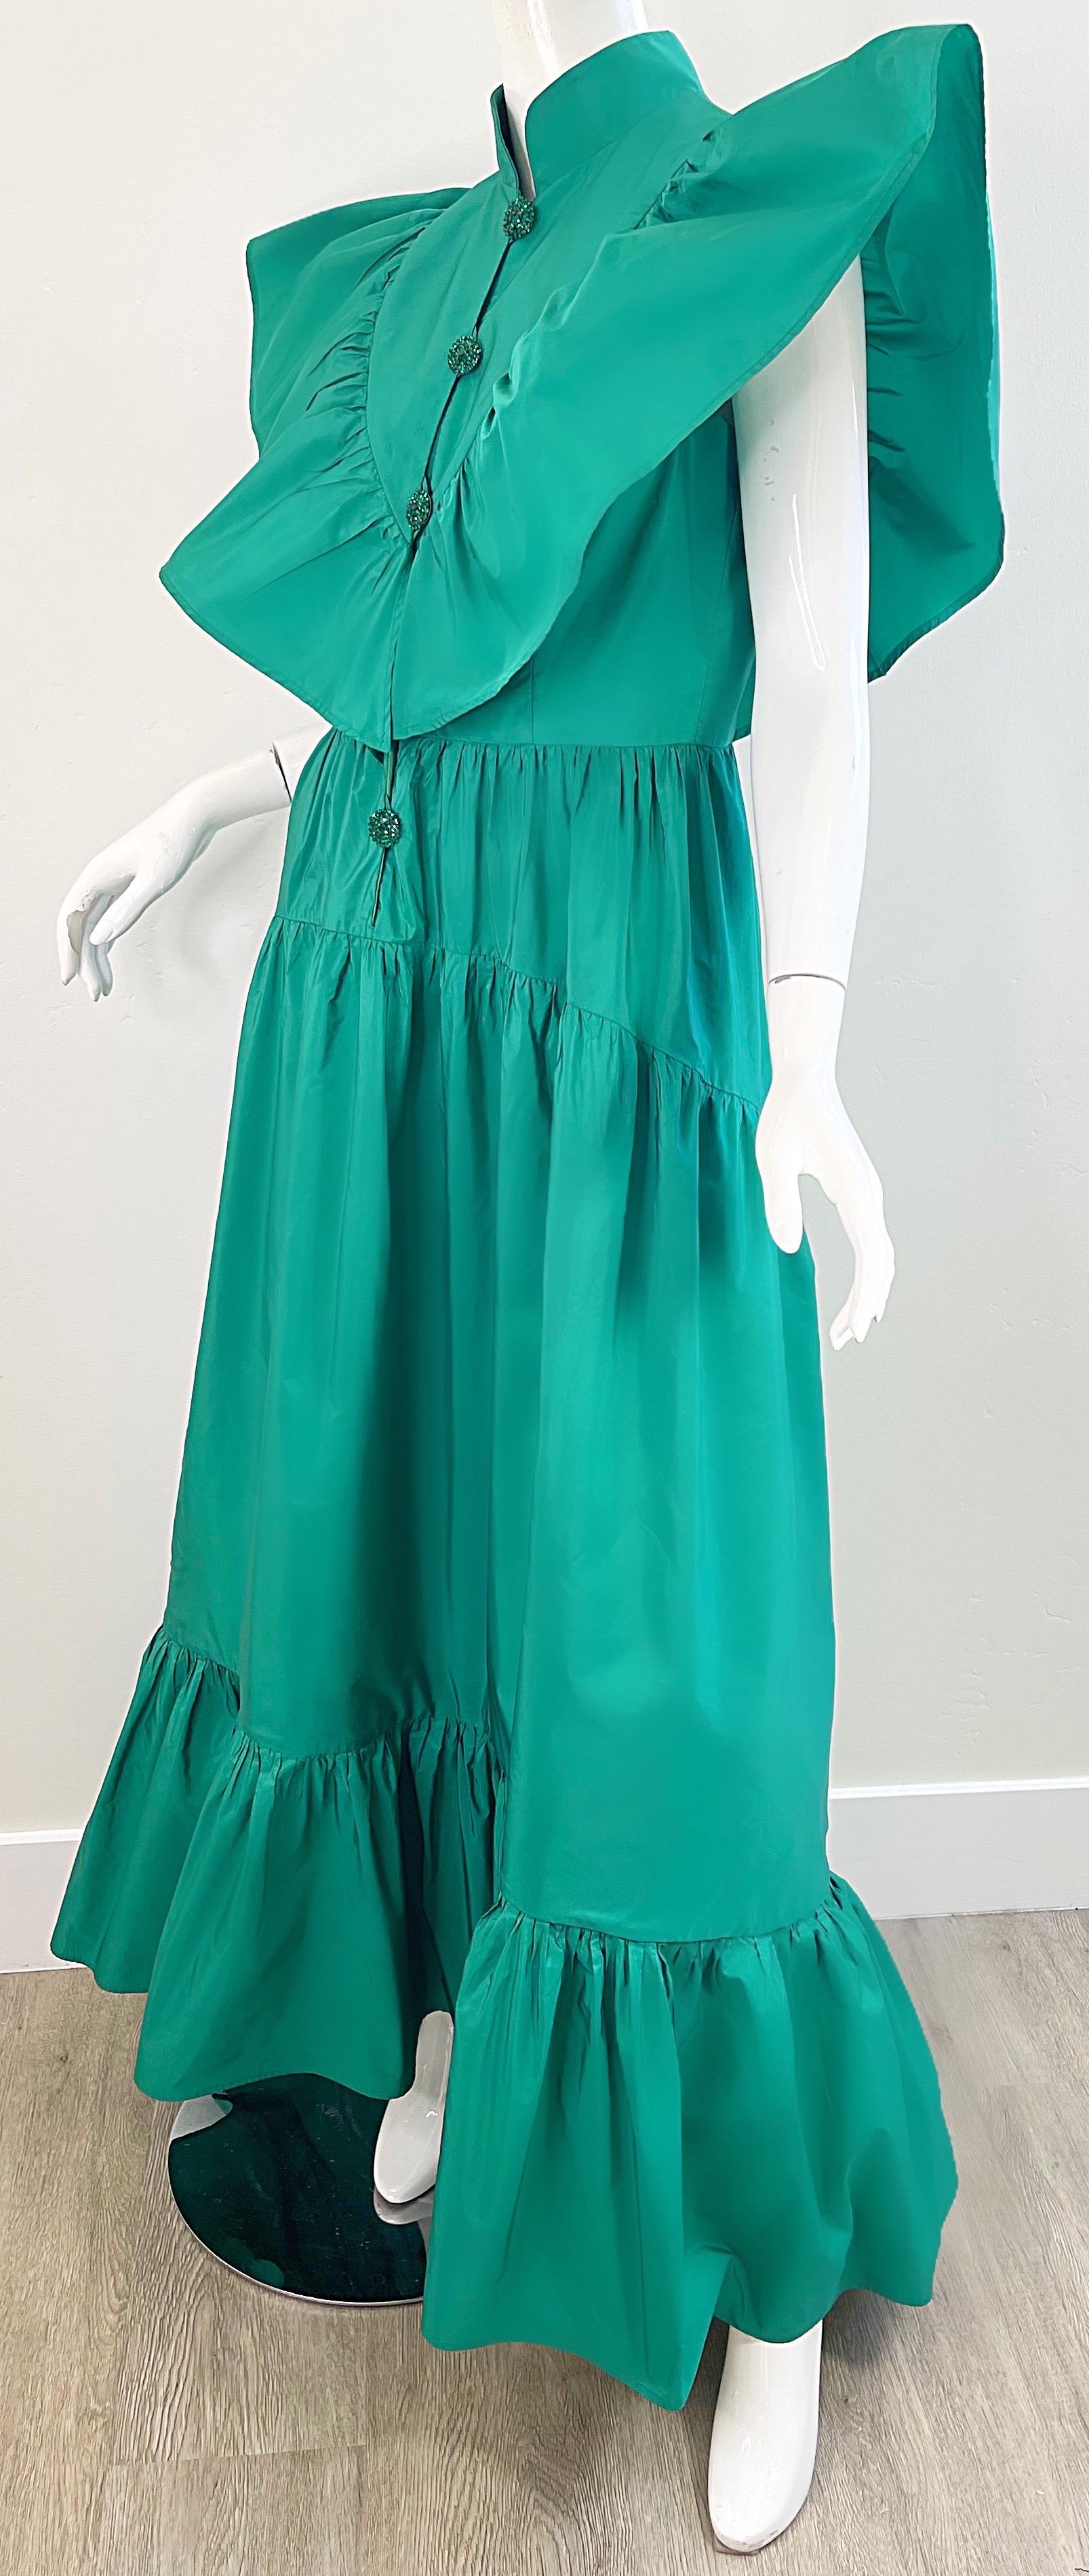 J. Perez Valette 2022 Kelly Green Avant Garde Silk Taffeta Rhinestone Gown Dress For Sale 8